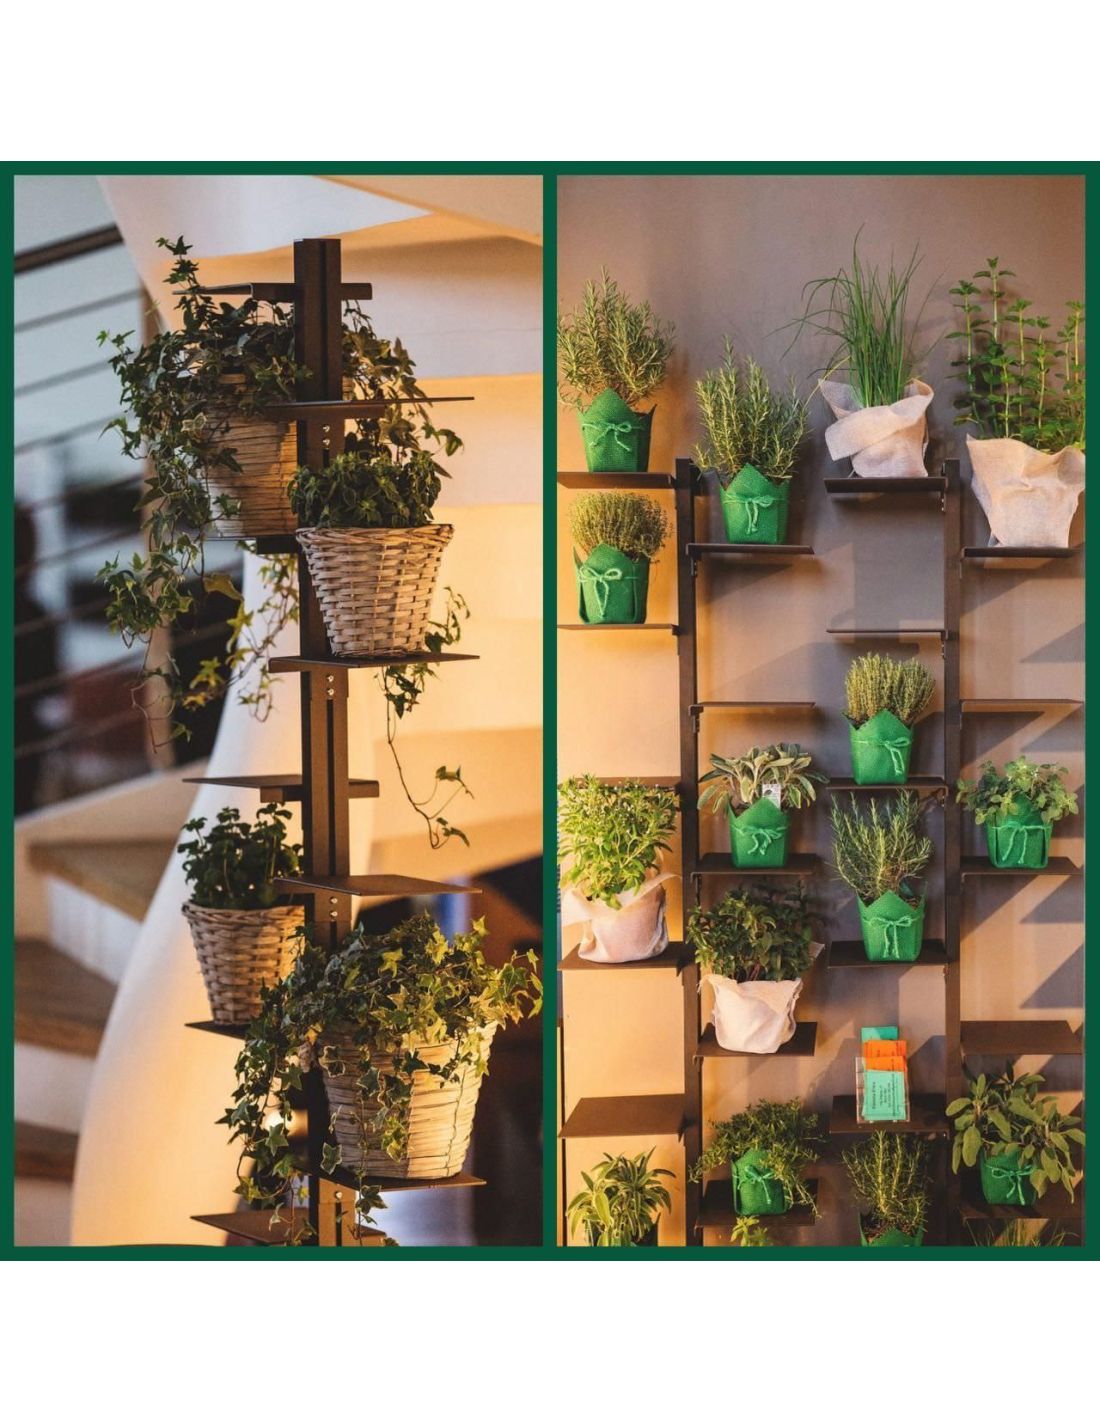 L'eleganza dei portavasi da parete per giardini verticali indoor